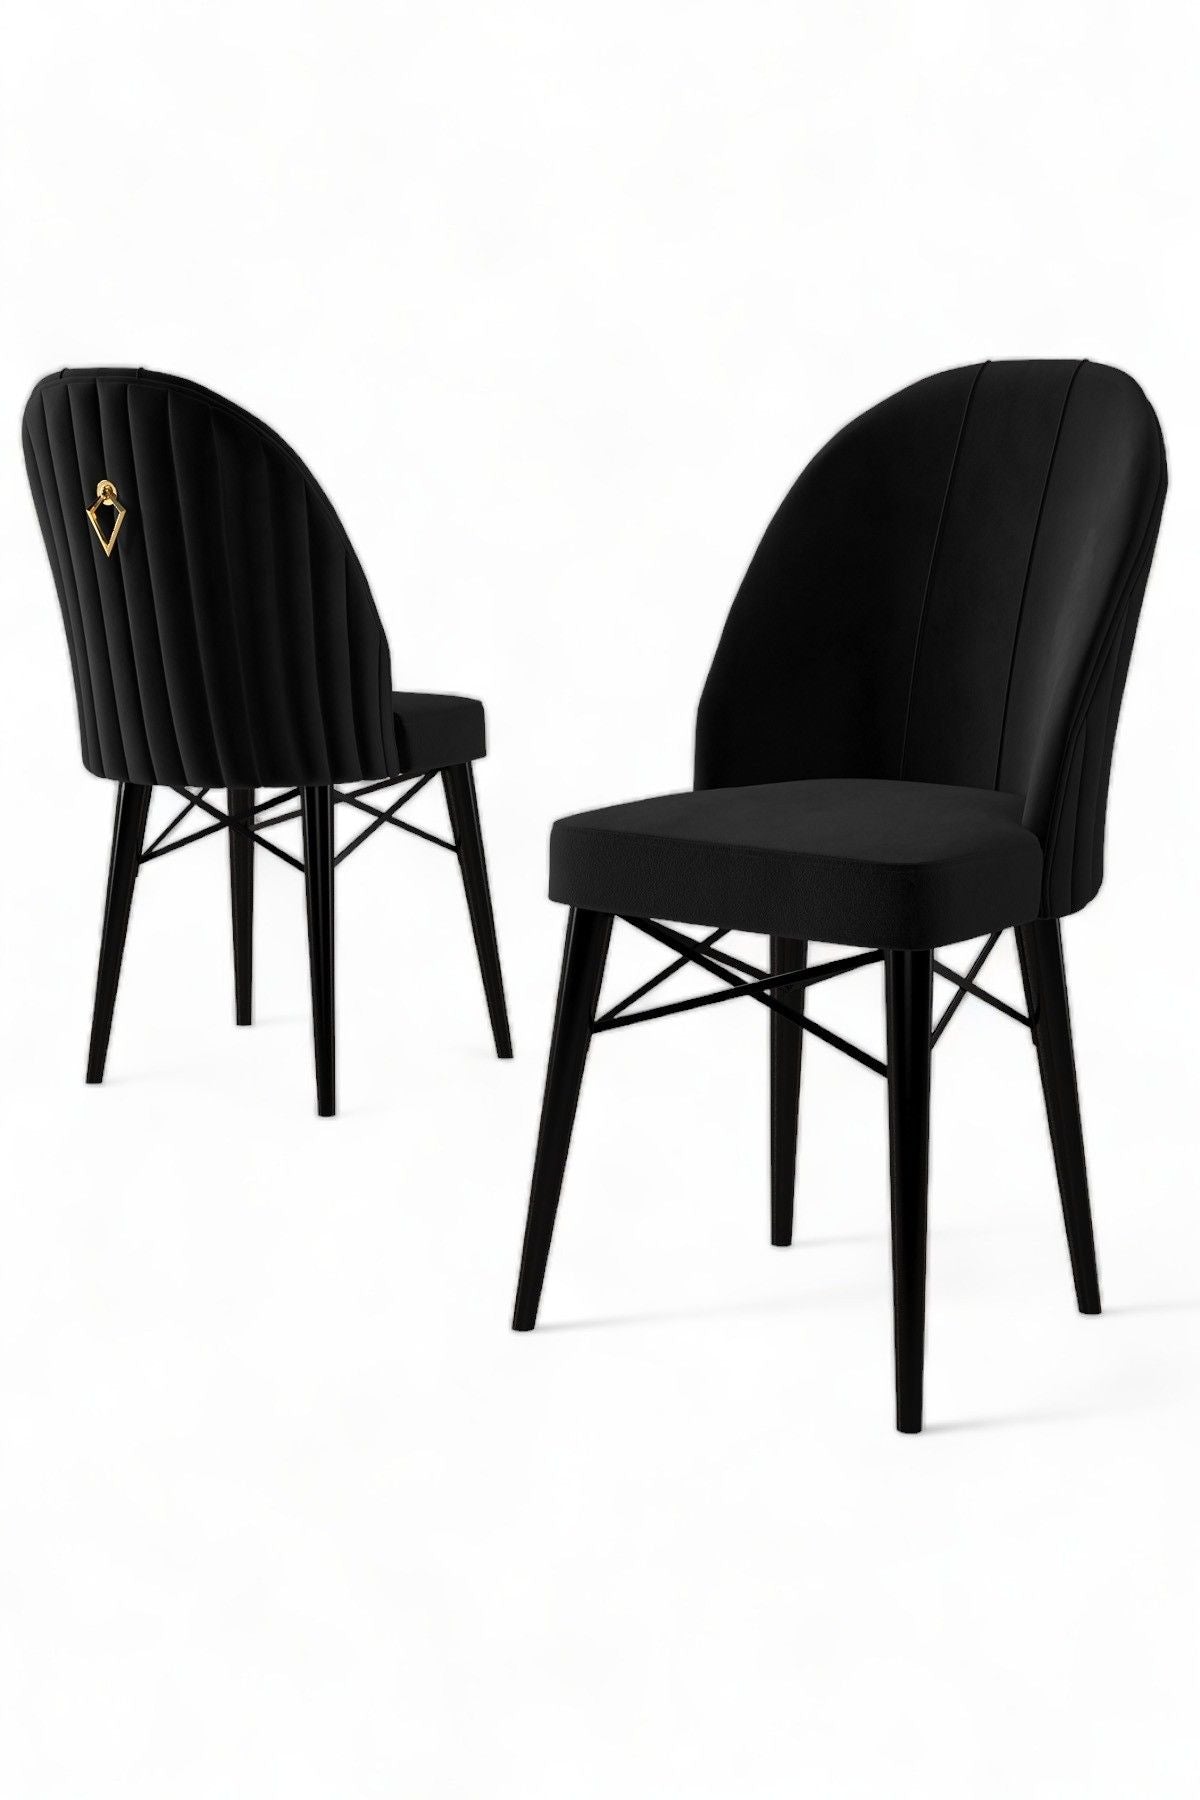 Ritim - Black - Chair Set (4 Pieces)